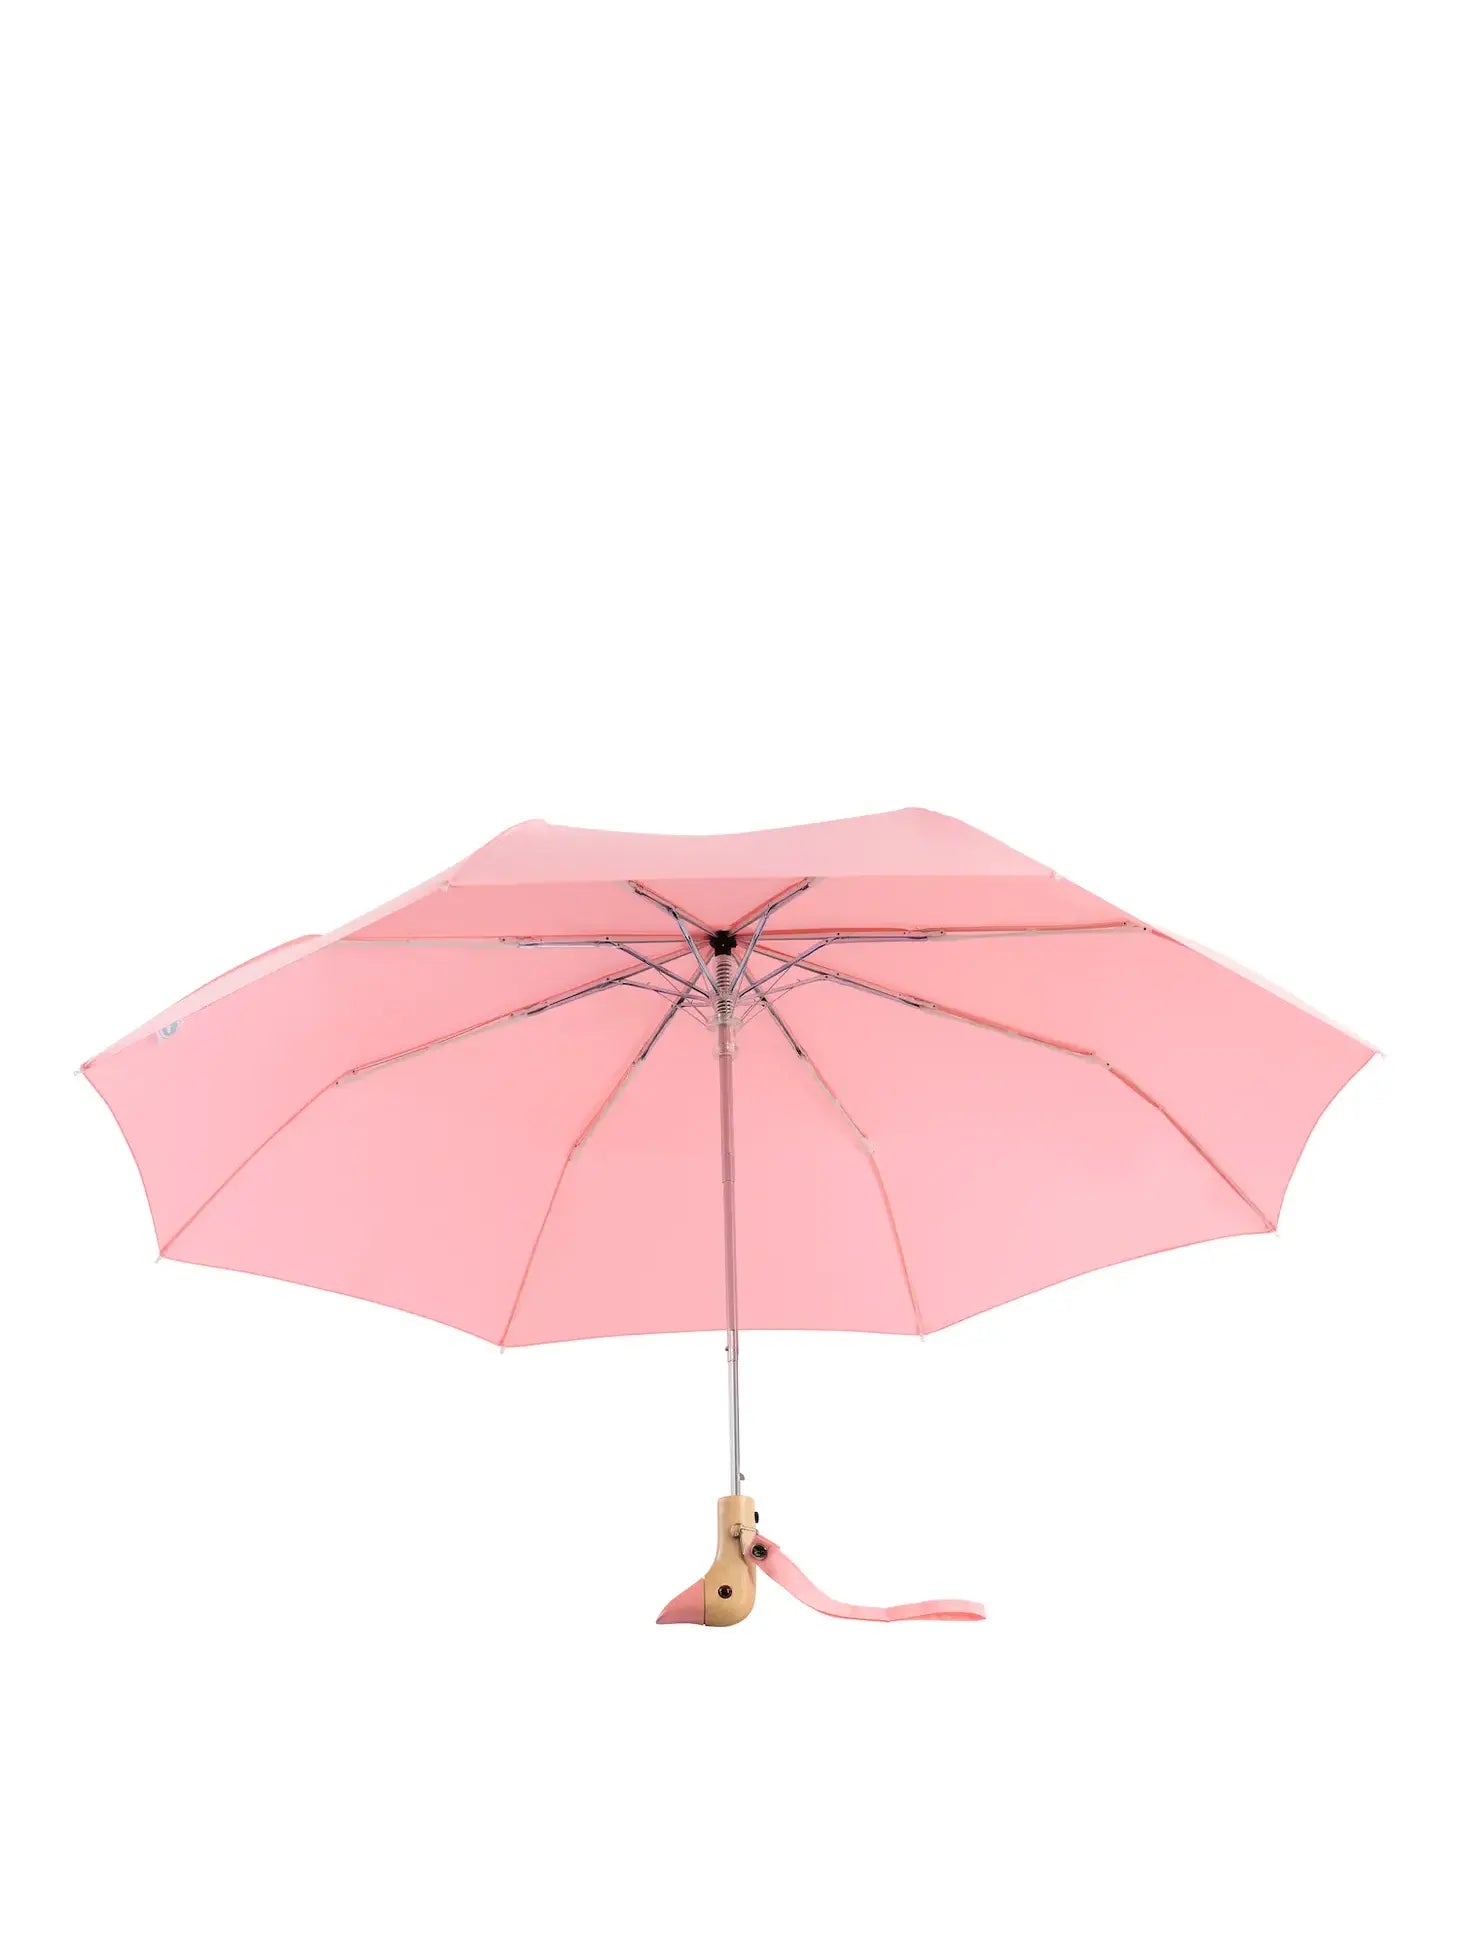 Duck Umbrella, pink